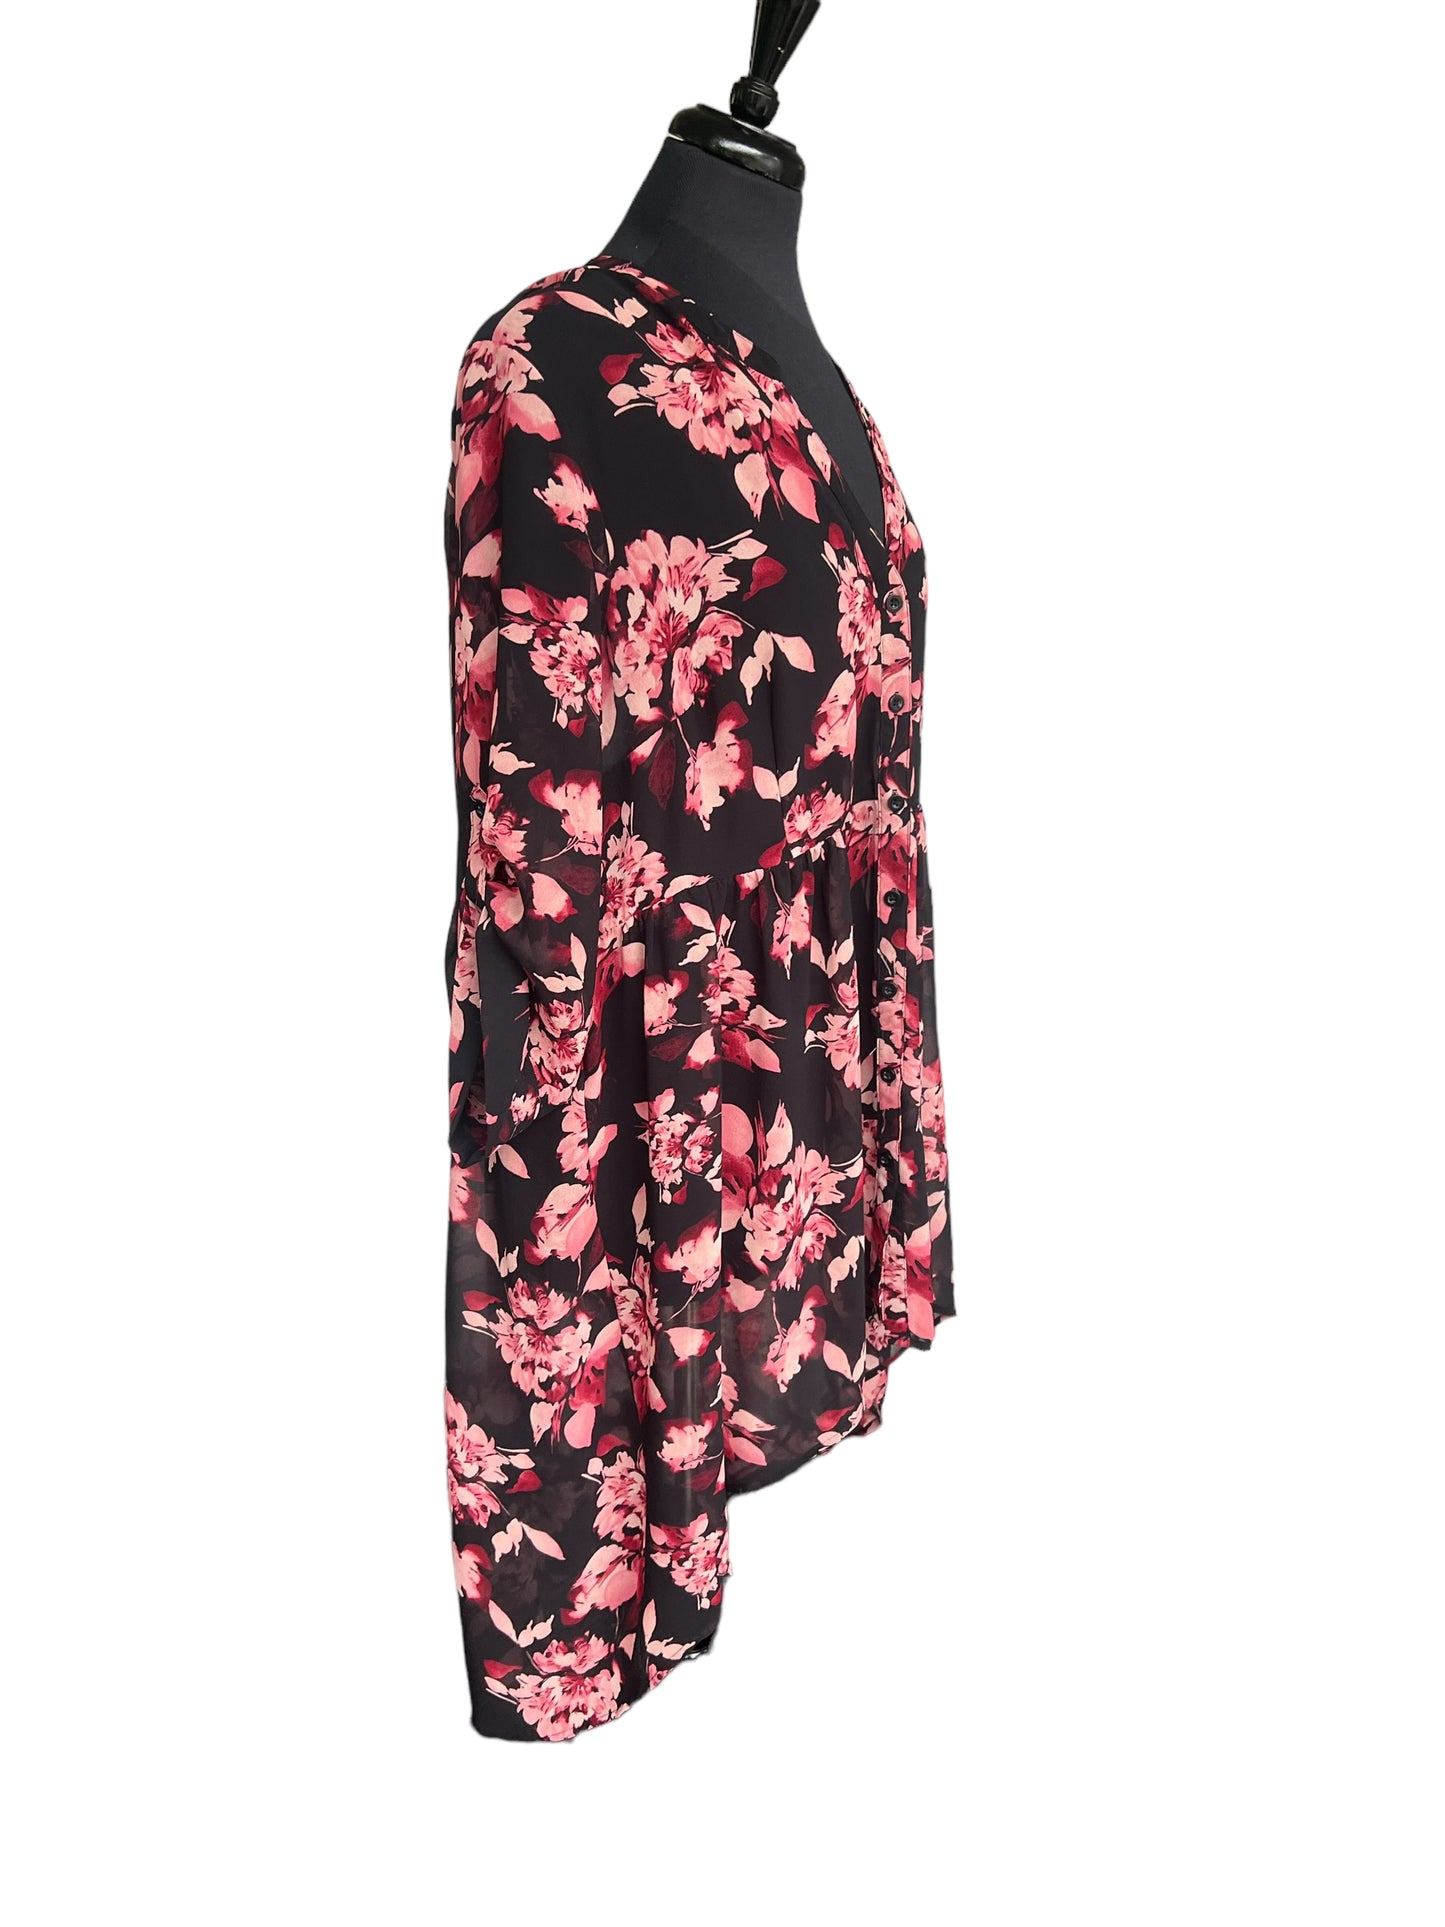 Torrid Kimono/Dress